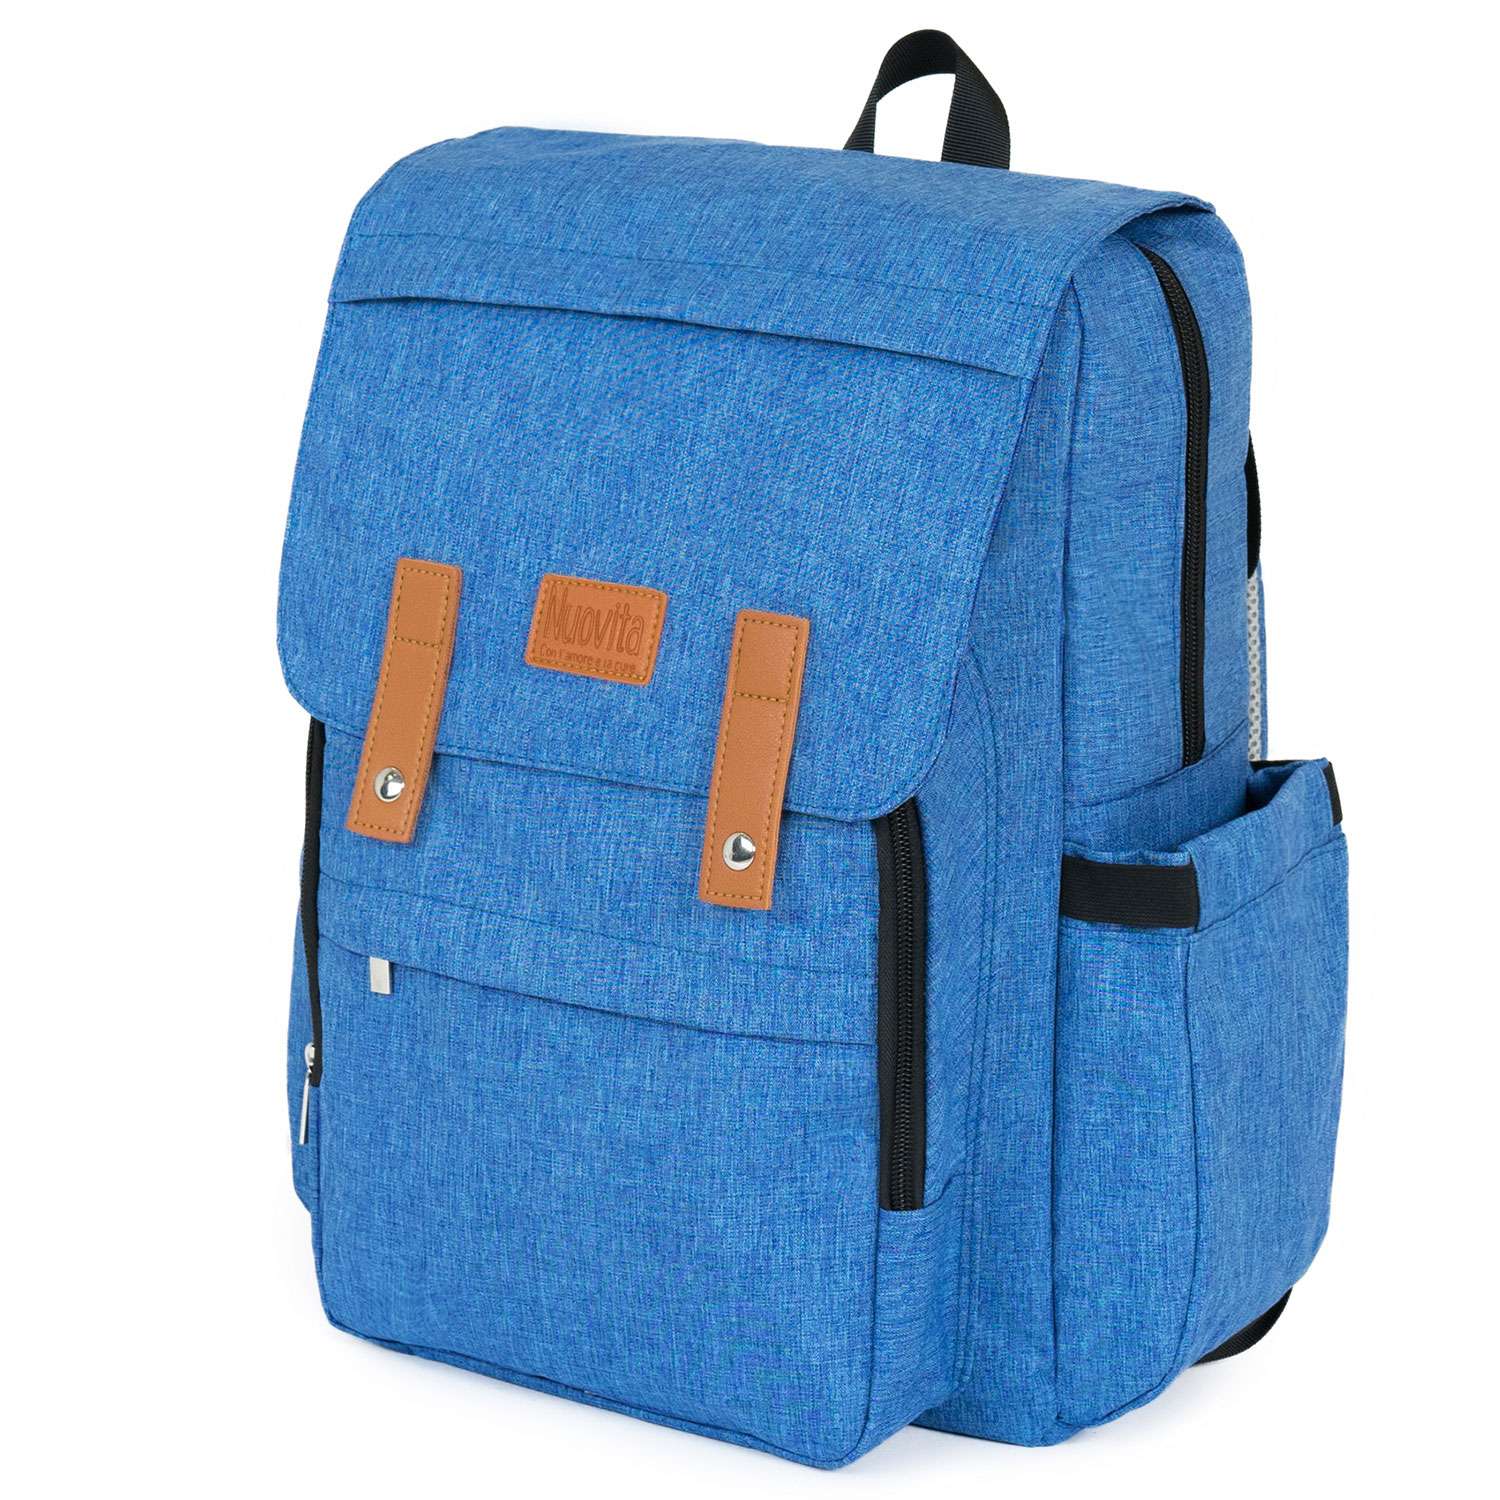 Рюкзак для мамы Nuovita CAPCAP hipster Голубой - фото 1